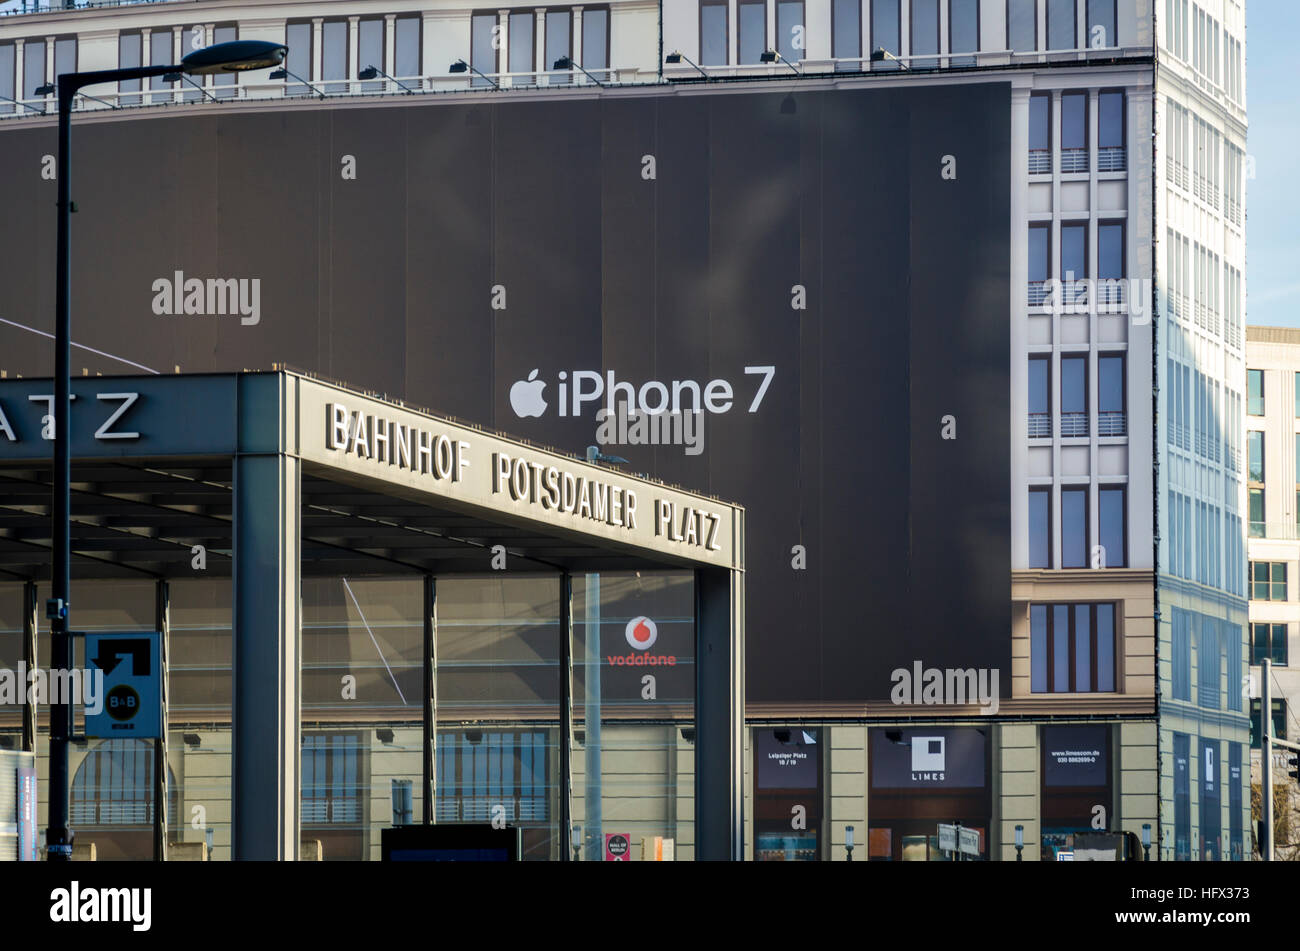 iPhone 7 billboard advertisement behind Potsdamer Platz station, Berlin, Germany Stock Photo